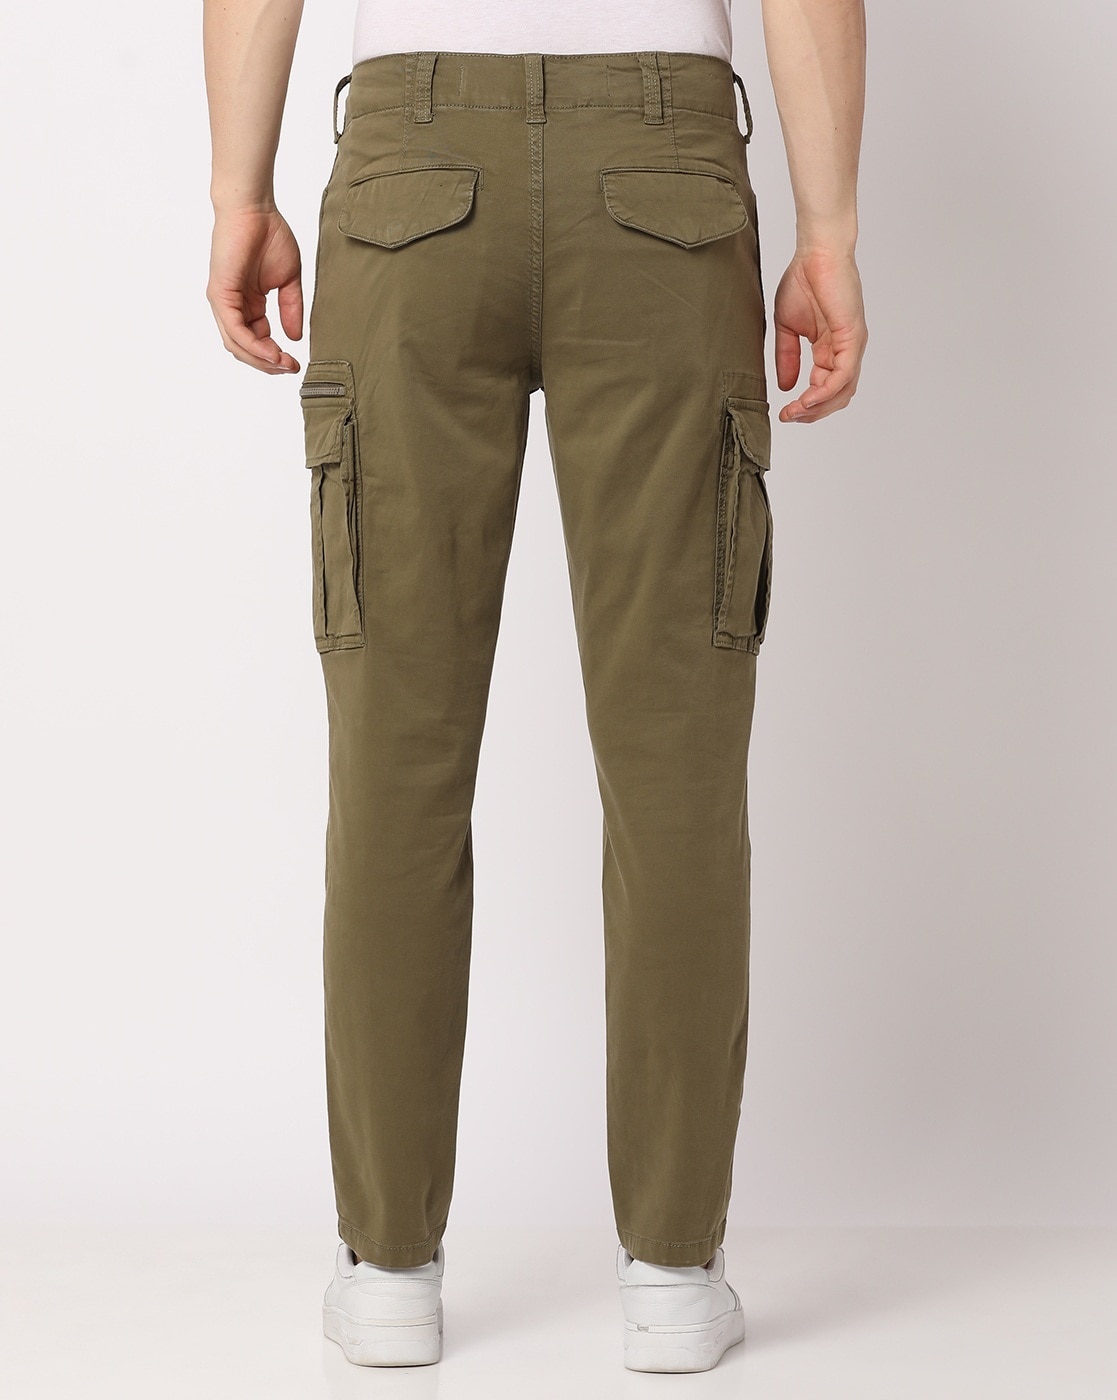 What To Wear With Plaid Pants? - 30 Men's Plaid Pants Outfit Ideas | Mens  plaid pants, Checkered pants mens, Pants outfit men